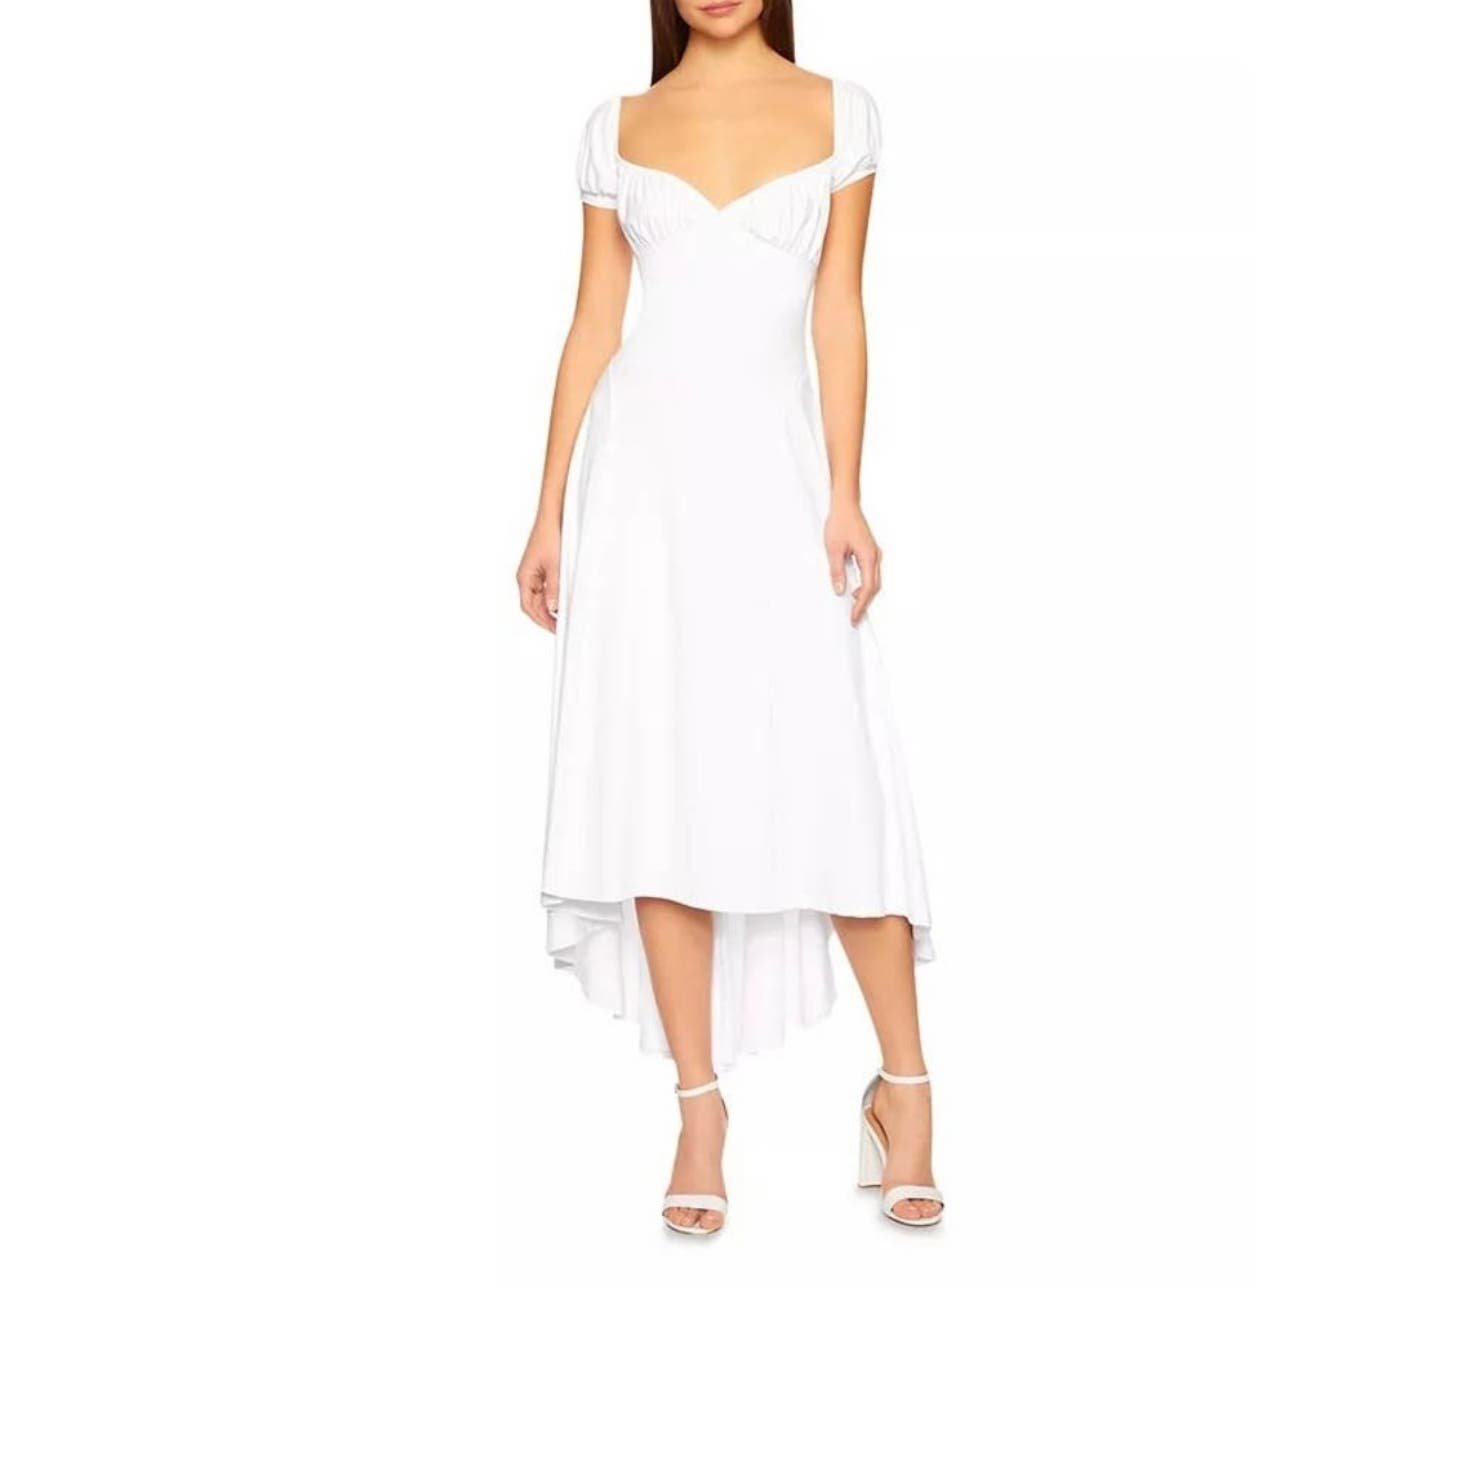 large selection Susana Monaco Sugar White Puff Sleeve Shoulder High Low Midi Dress Small $198.00 MQJz0eKYc Buying Cheap